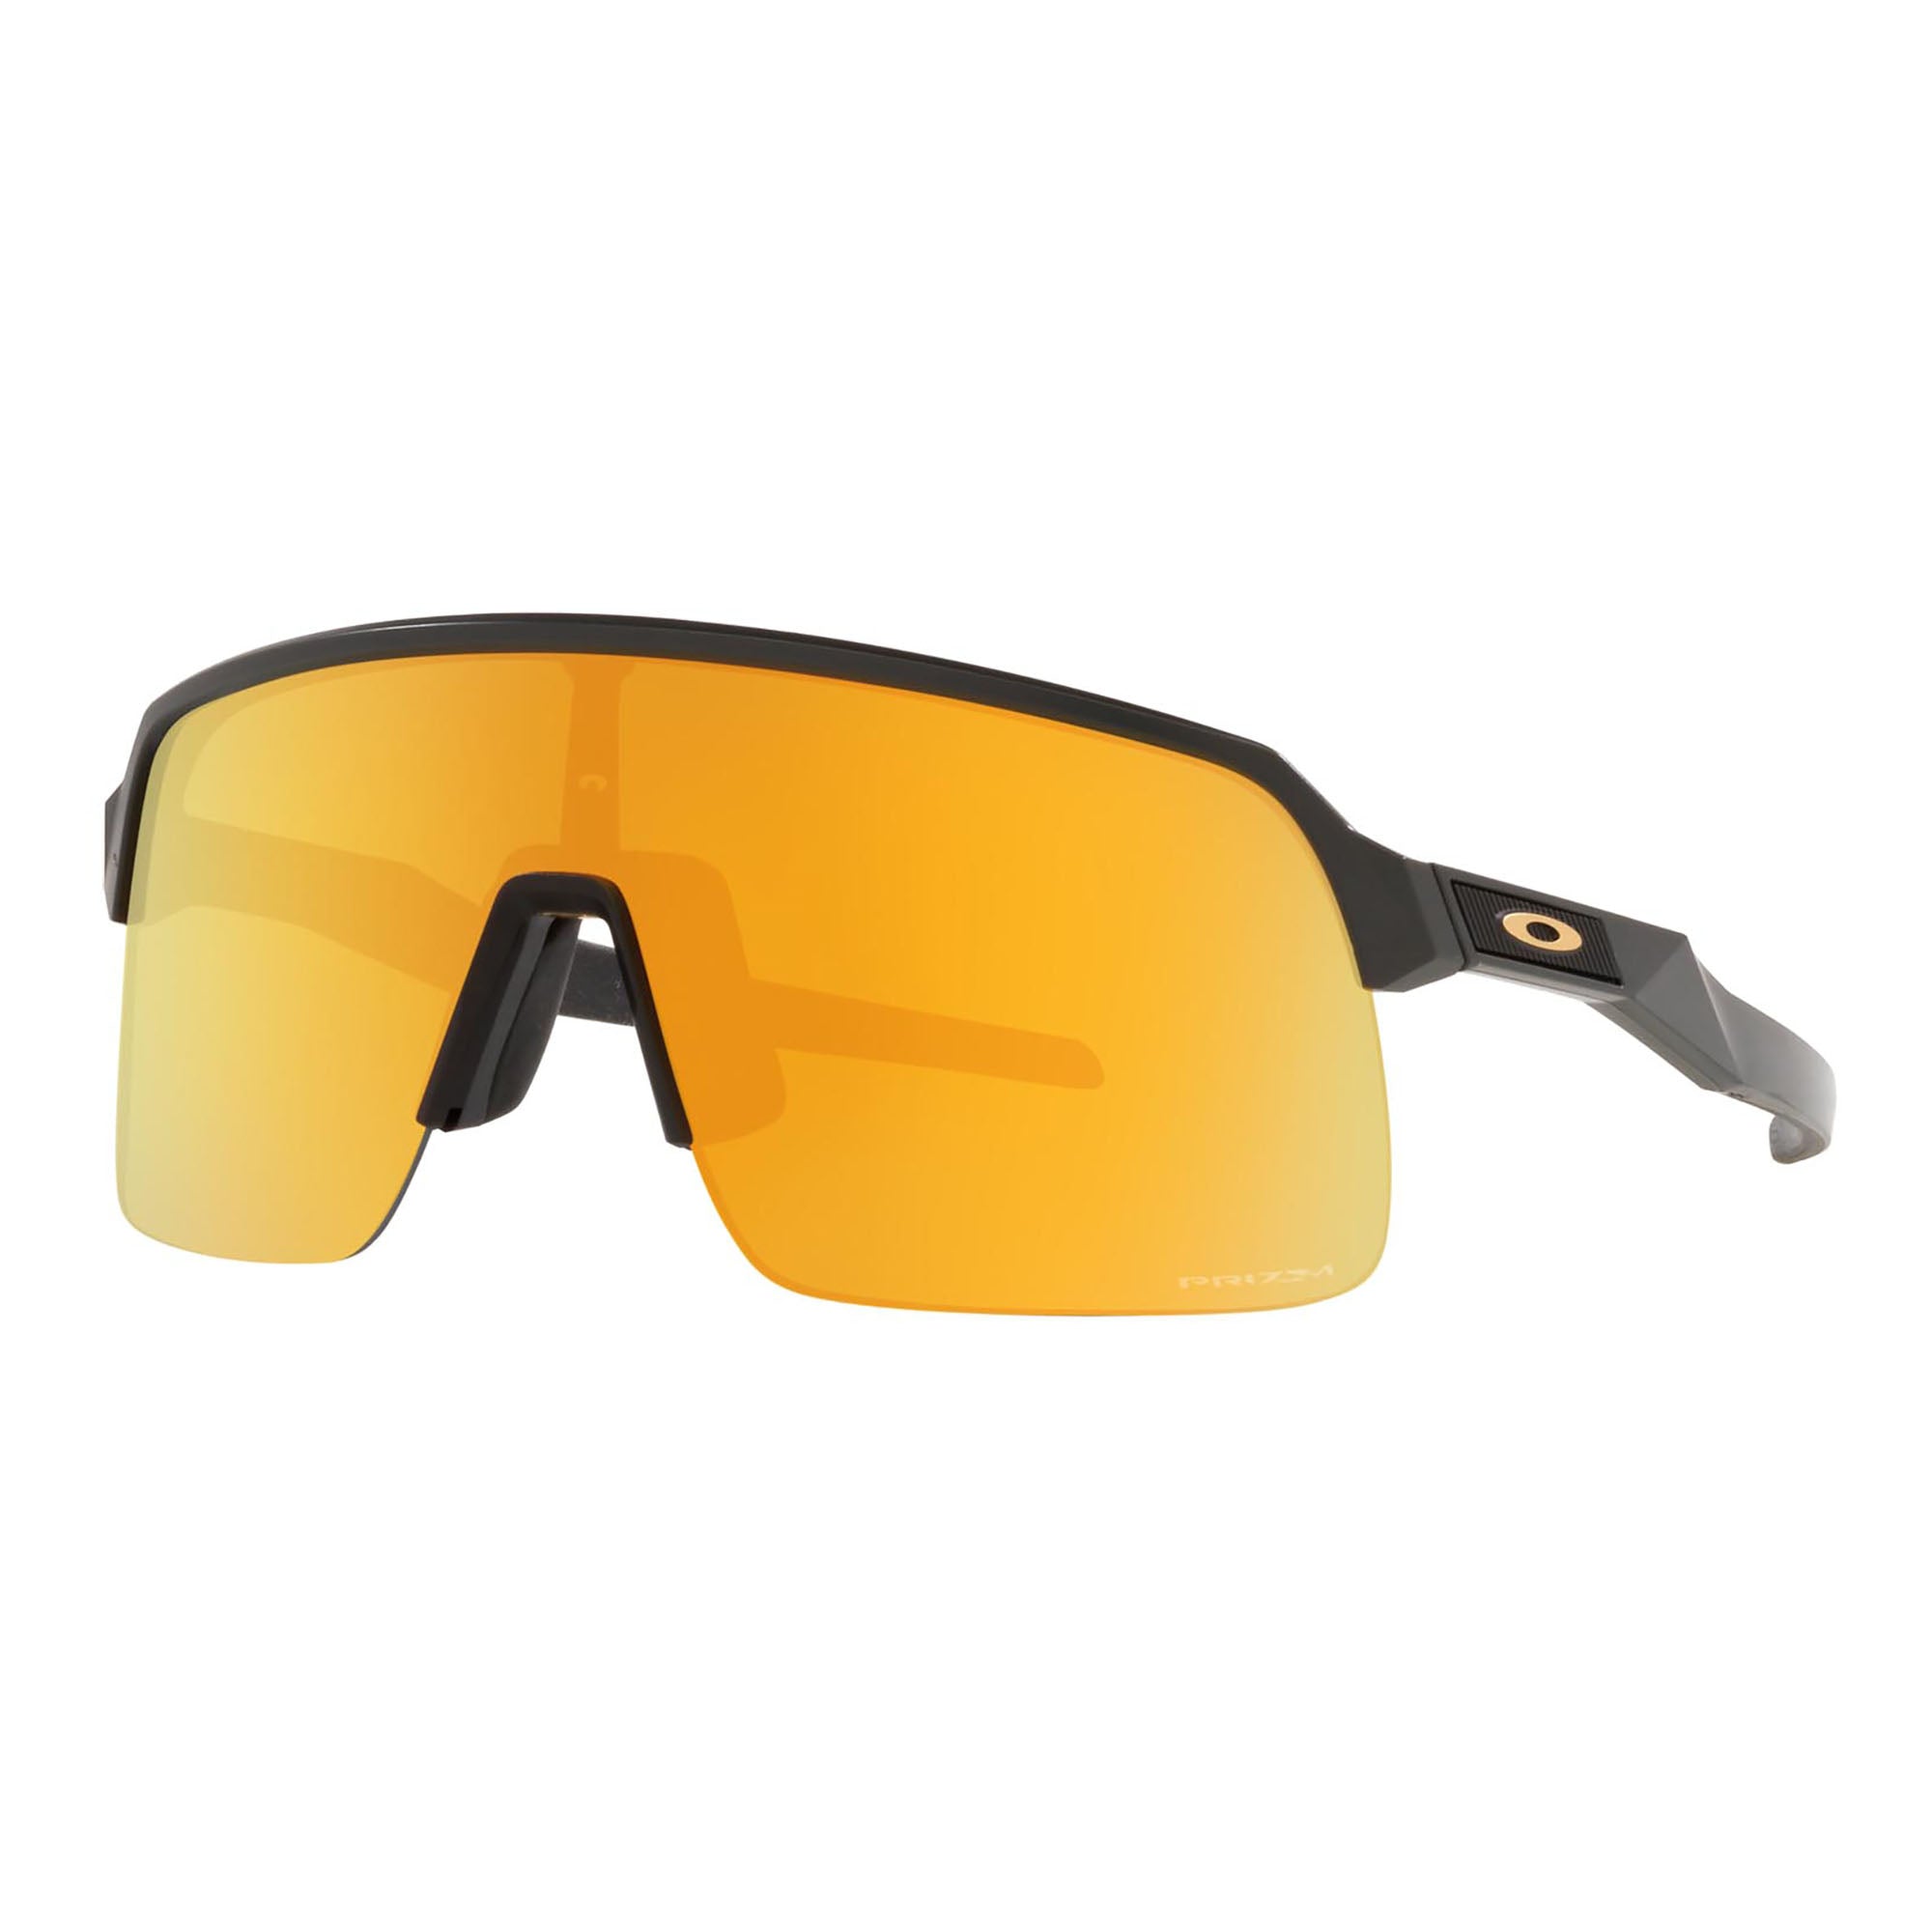 Buy Green & Yellow Shade Sunglasses Online at Low Price - Lenskart